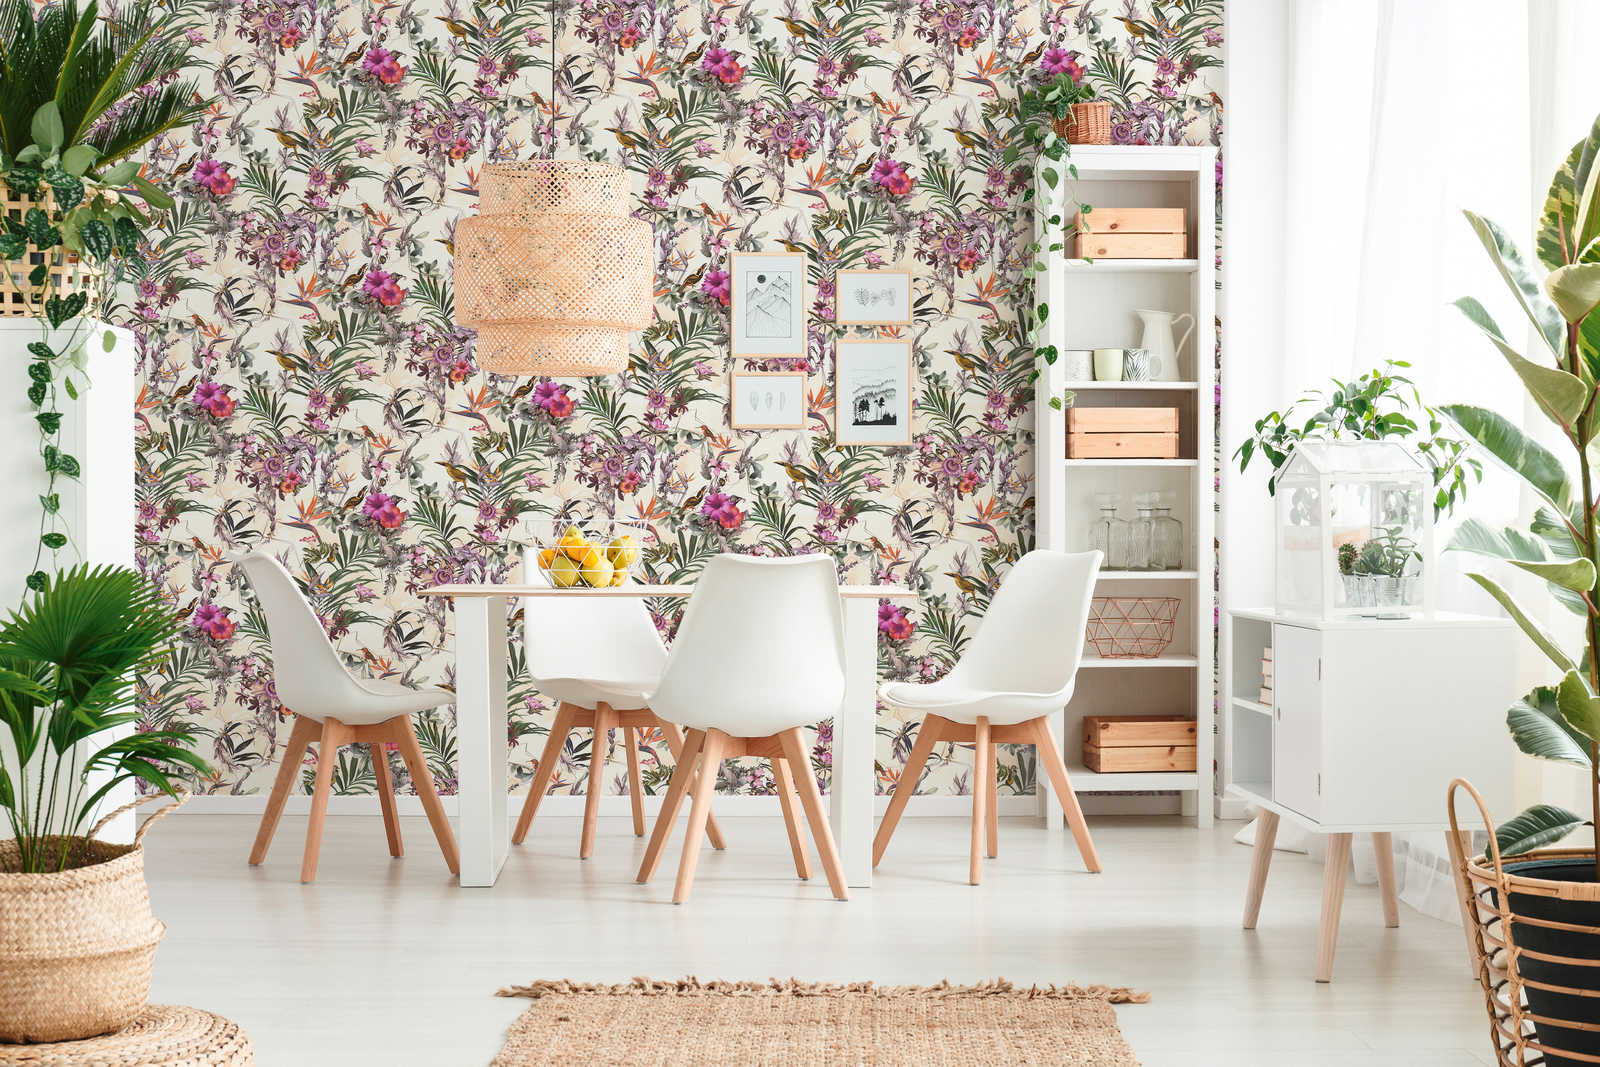             Design wallpaper flowers & birds in Art style - beige, green, pink
        